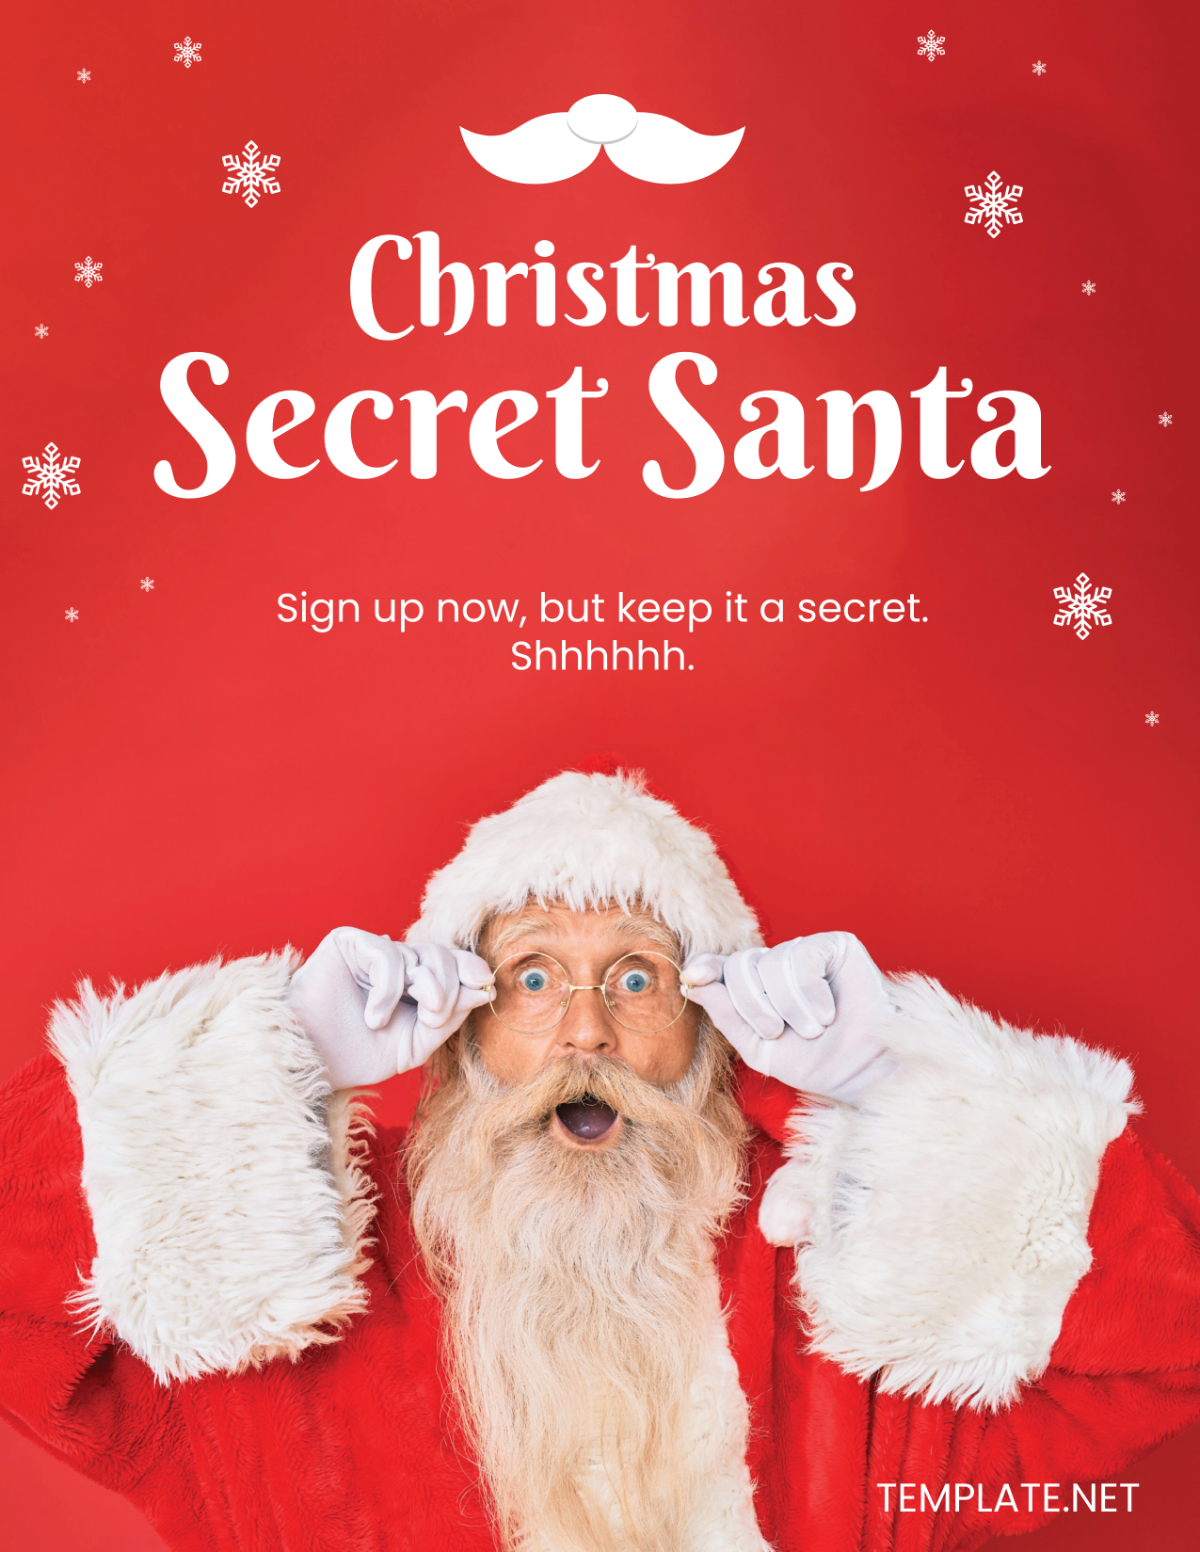 Free Christmas Secret Santa Flyer Template